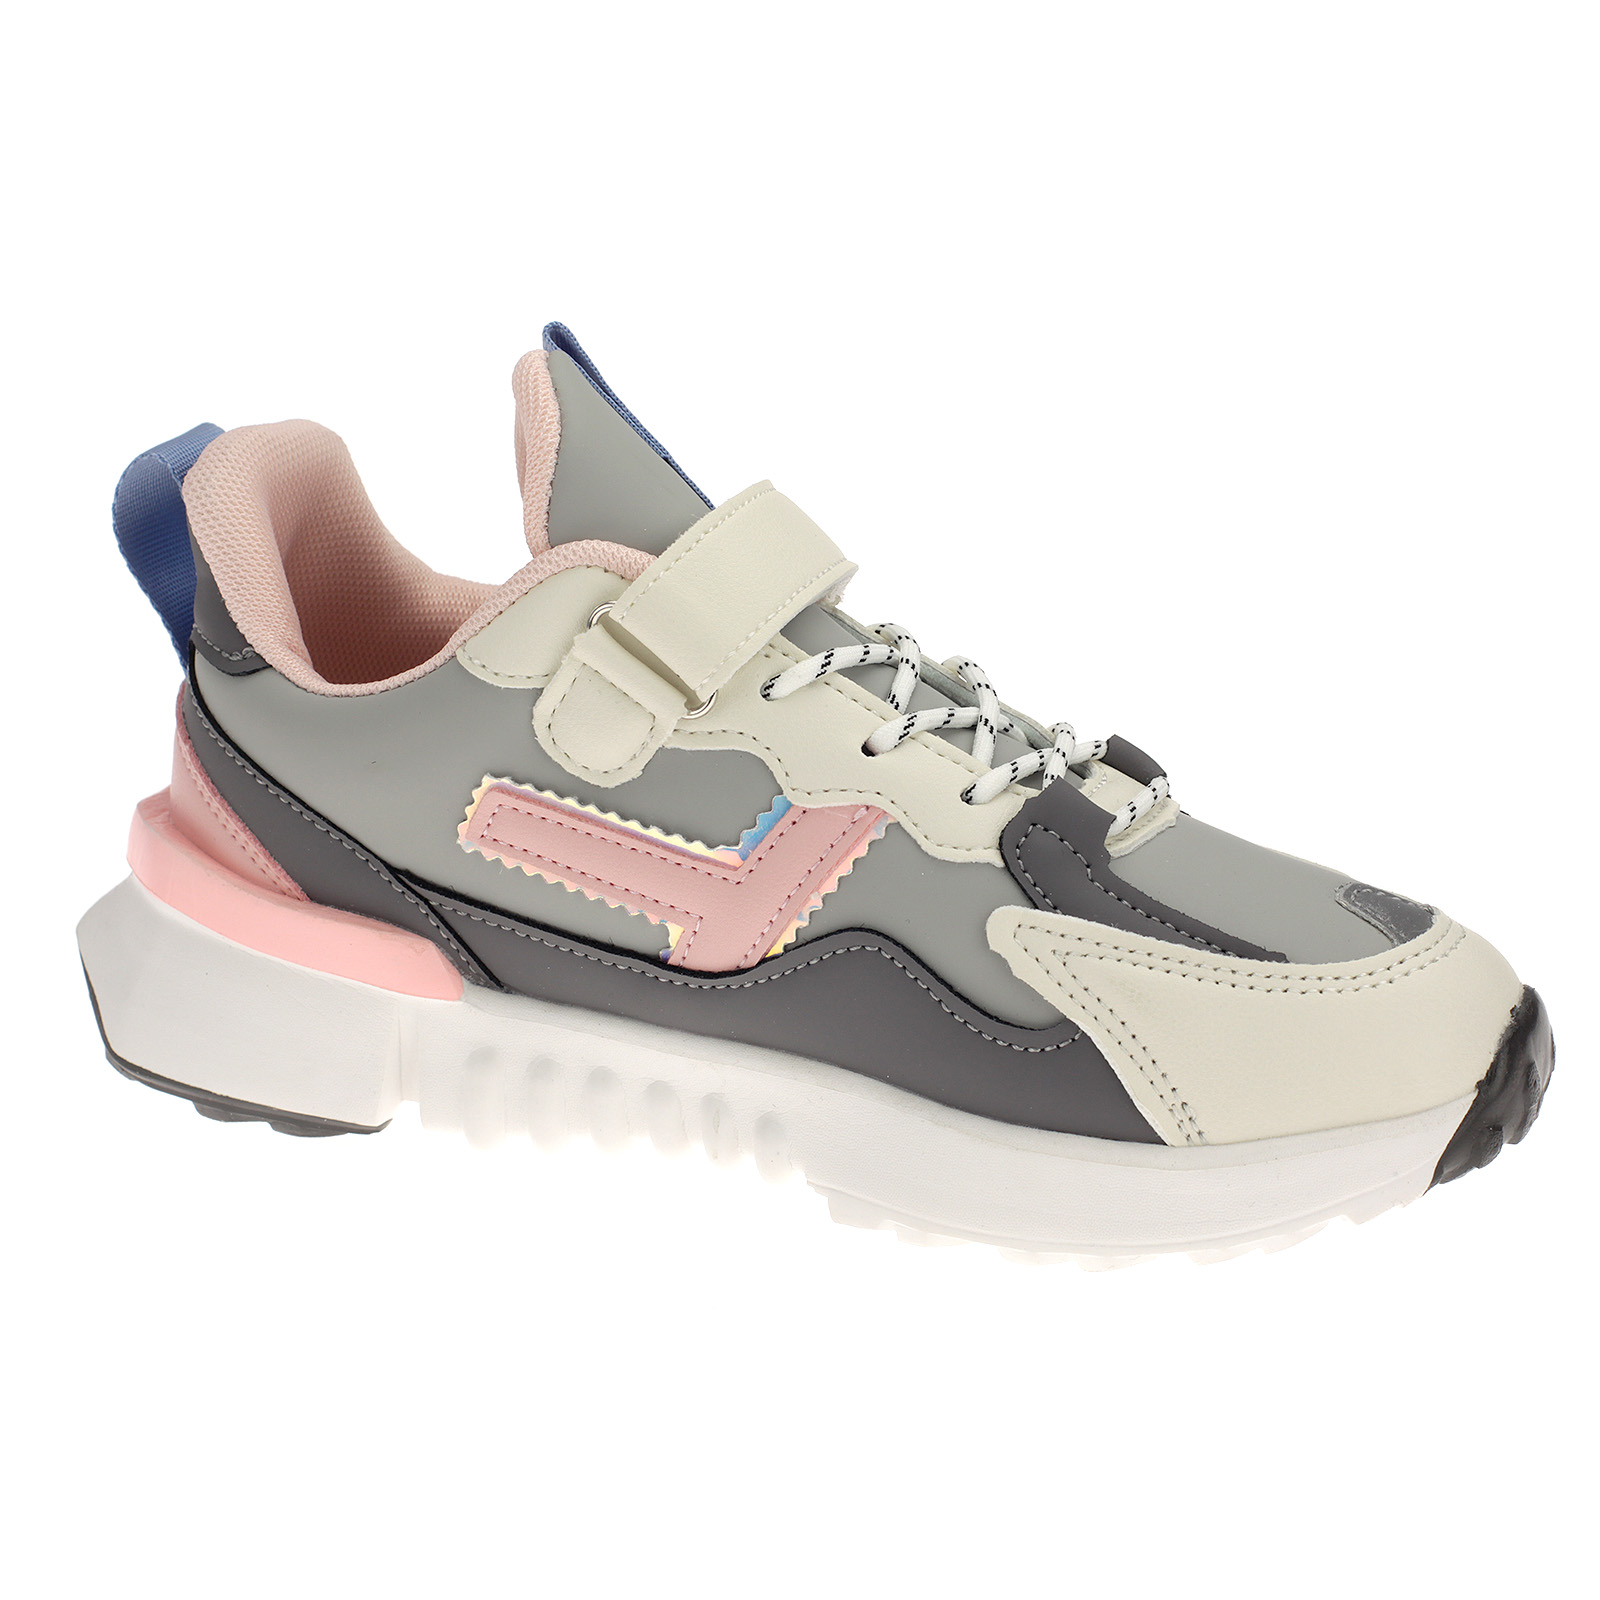 Kinderschuhe Sneaker mit Klettverschluss 4046 Pink Grau